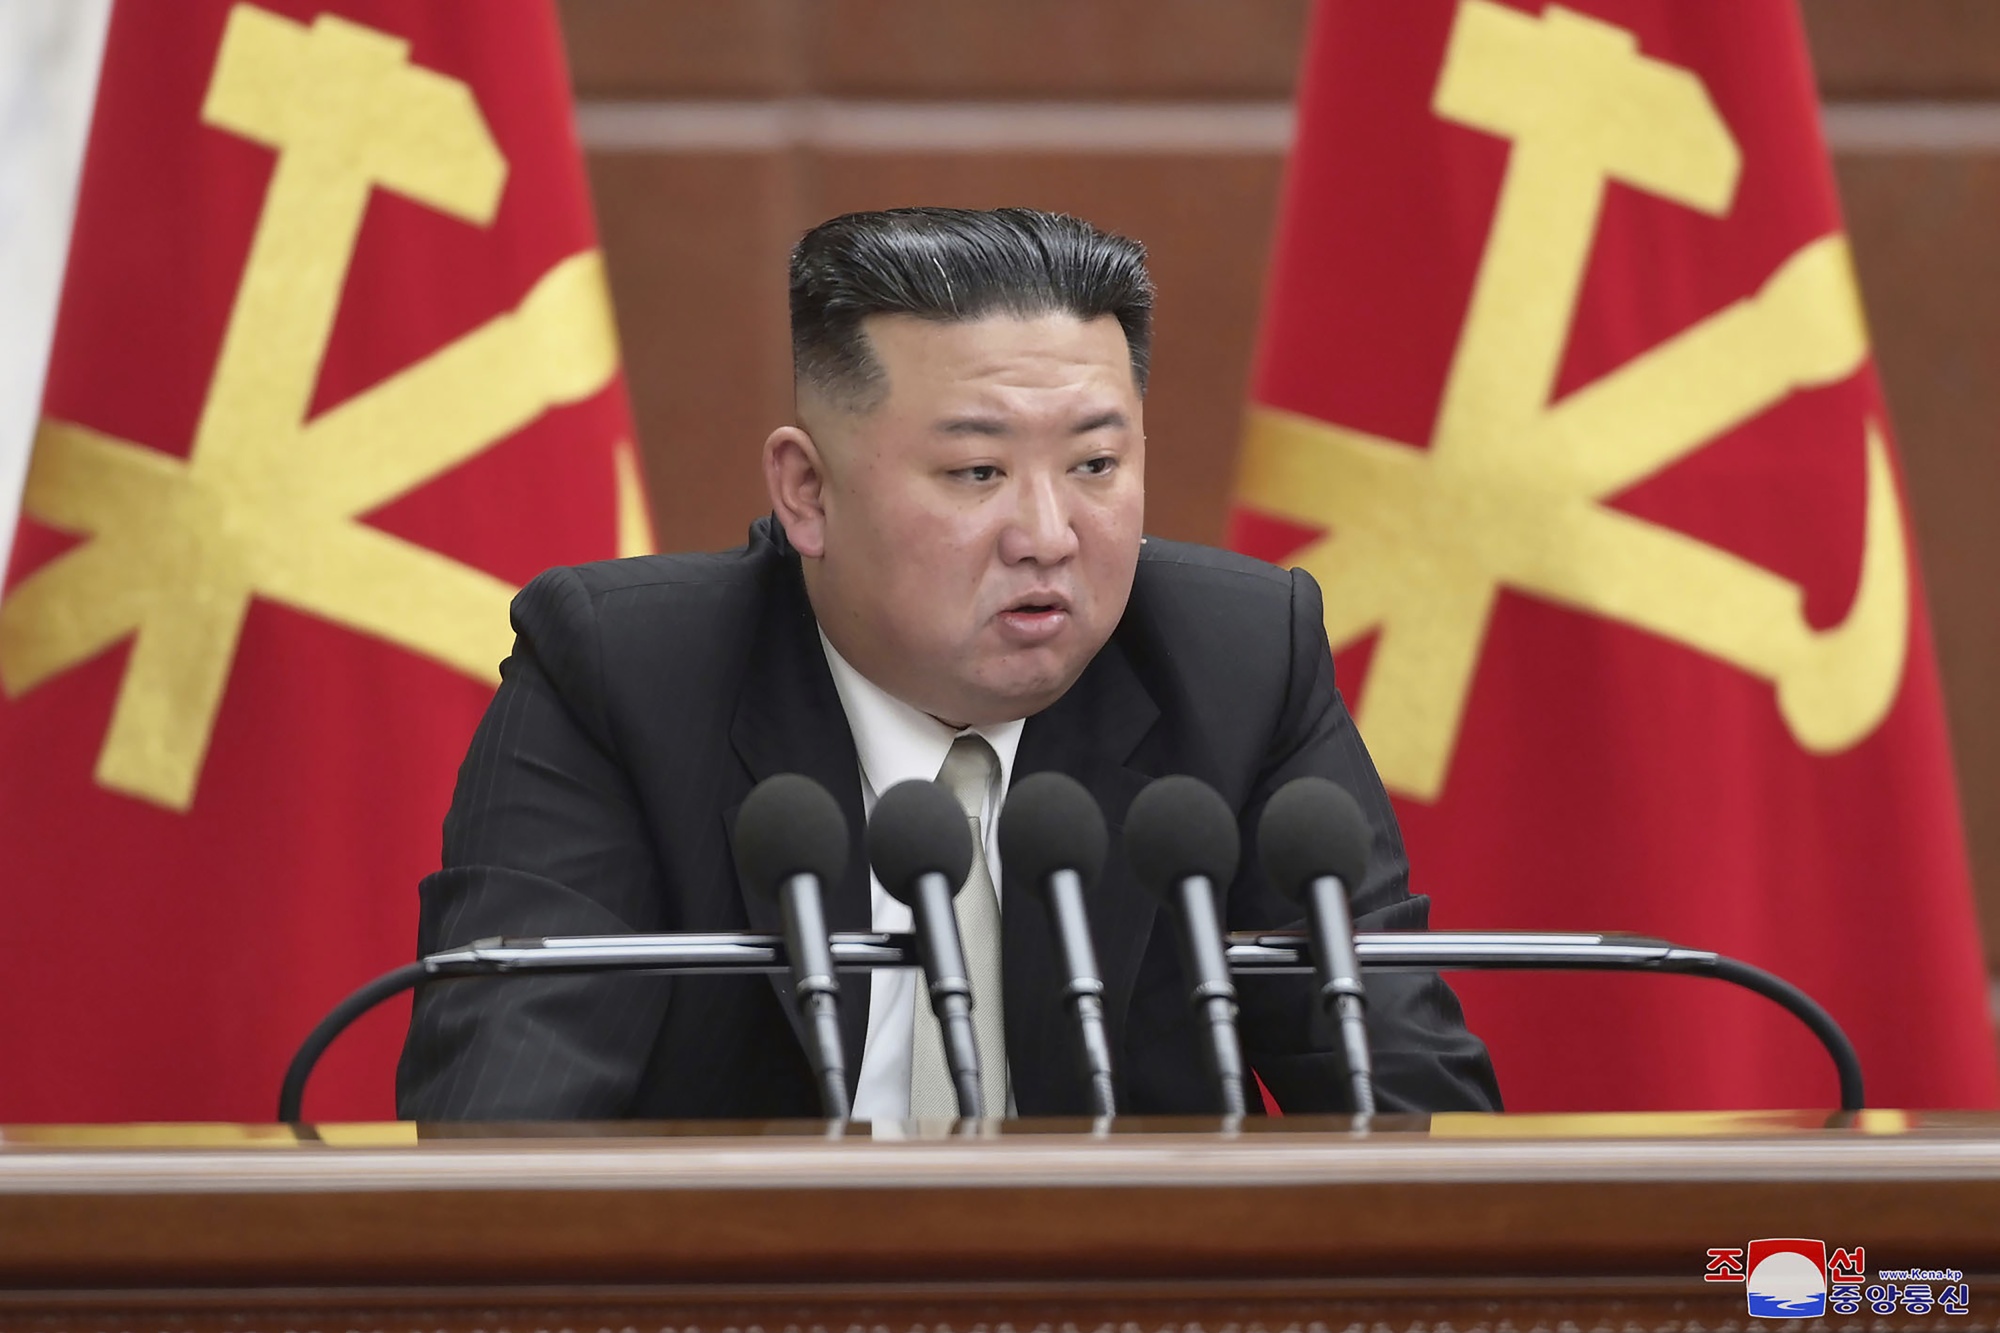 Kim Jong Un attends the Workers Party of Korea, in Pyongyang, on Dec. 27.